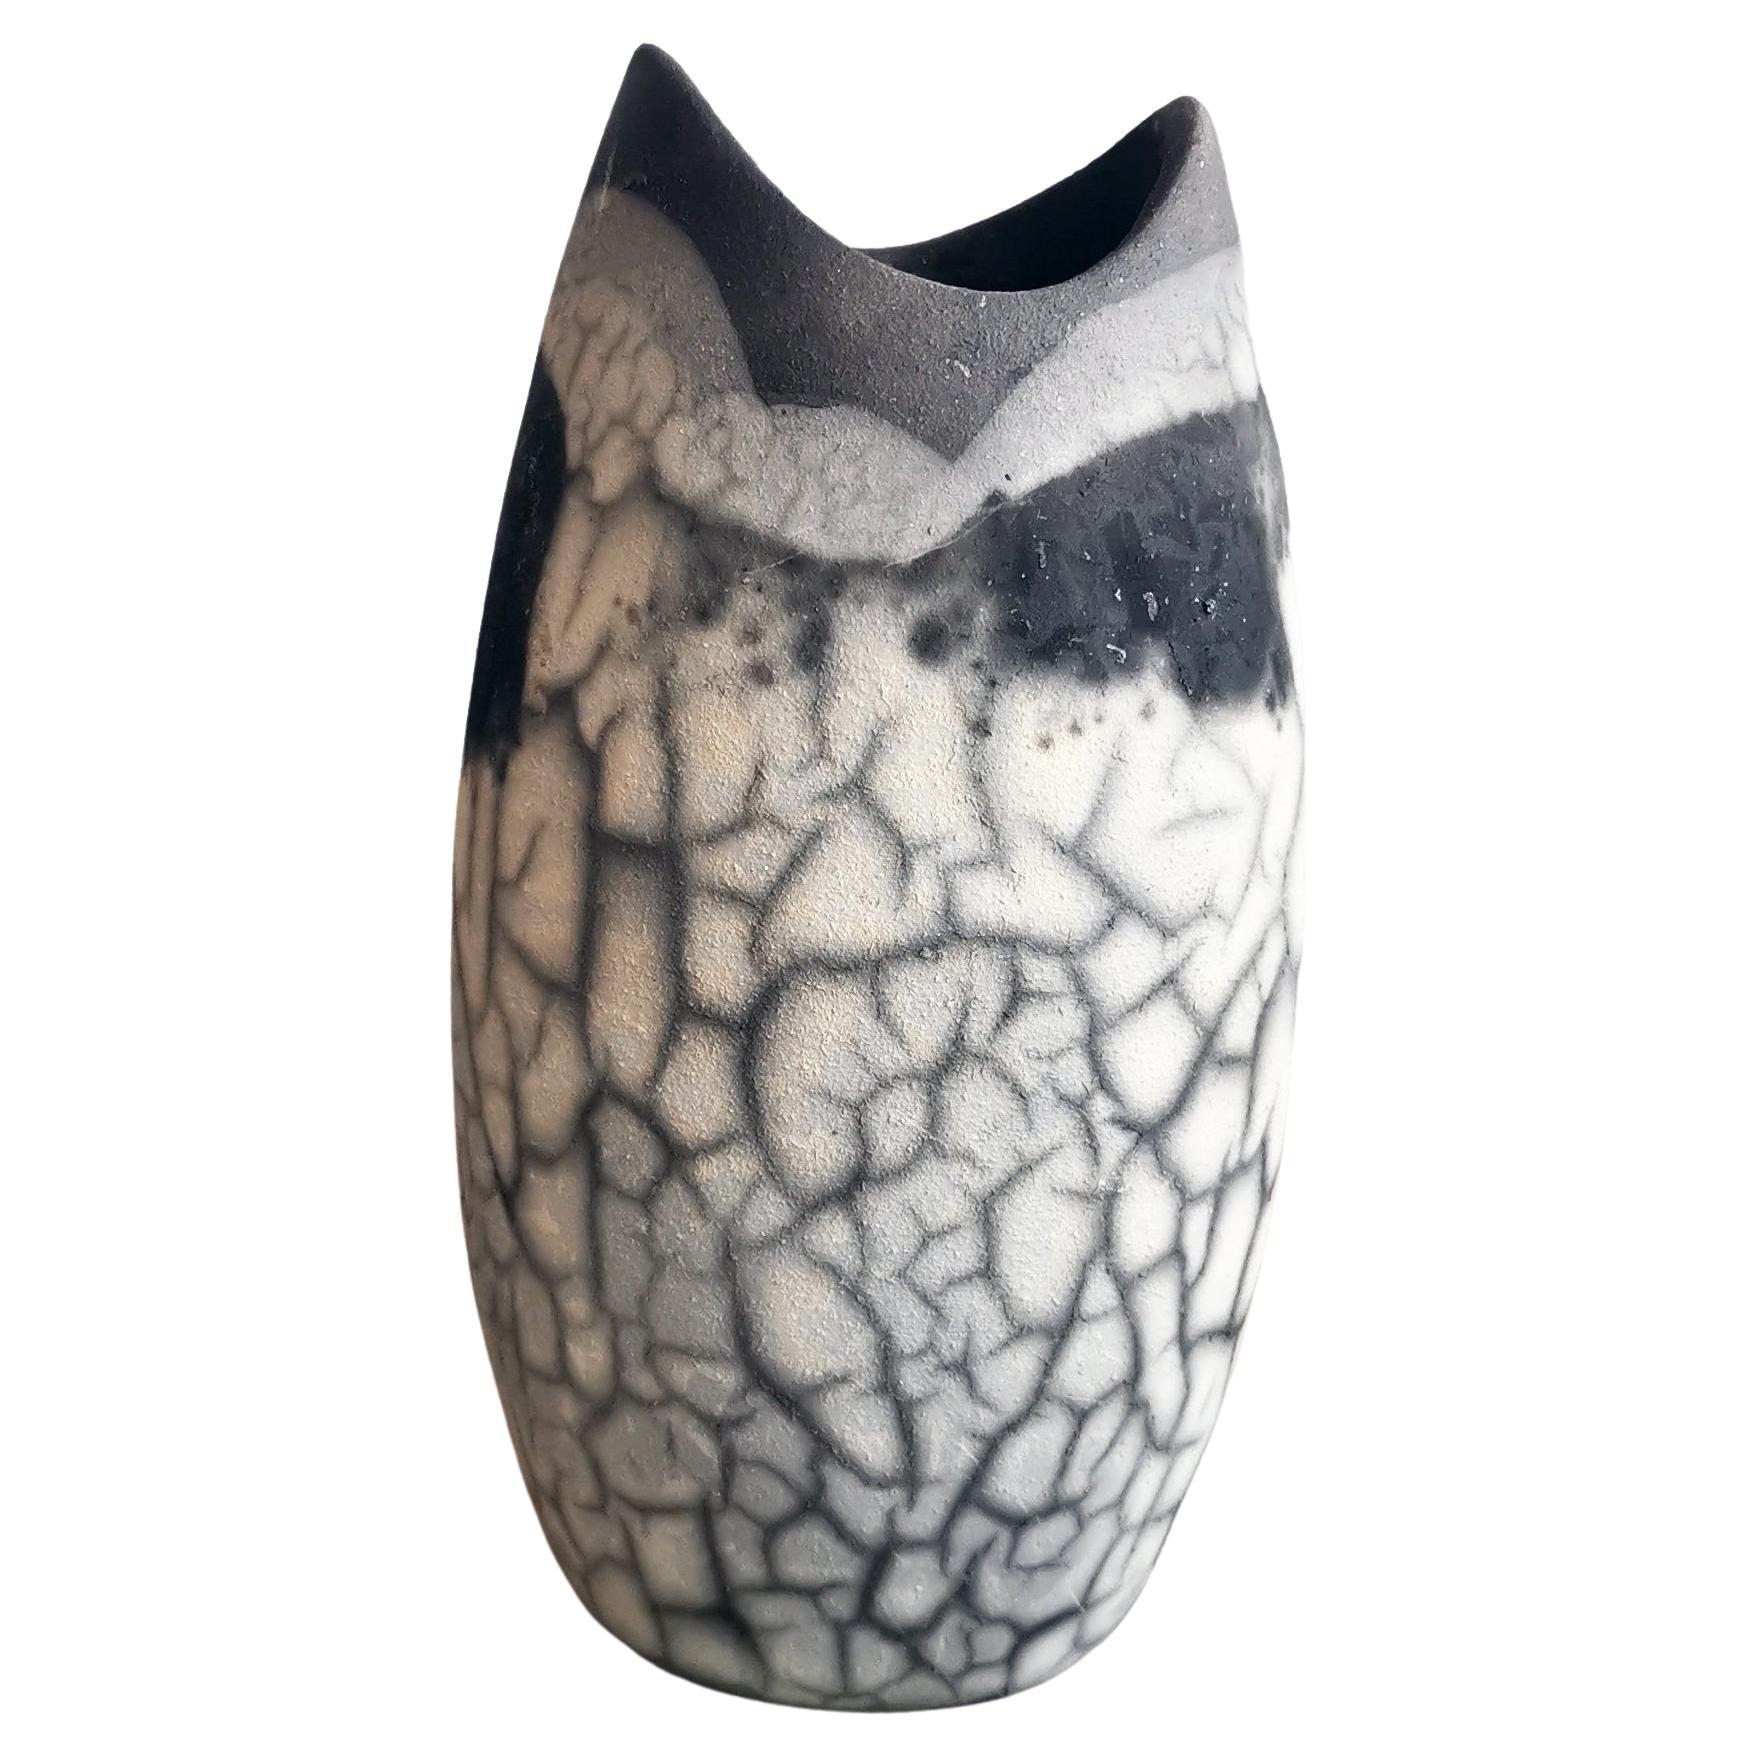 Raaquu Koi Raku Pottery Vase, Smoked Raku, Handmade Ceramic Home Decor For Sale